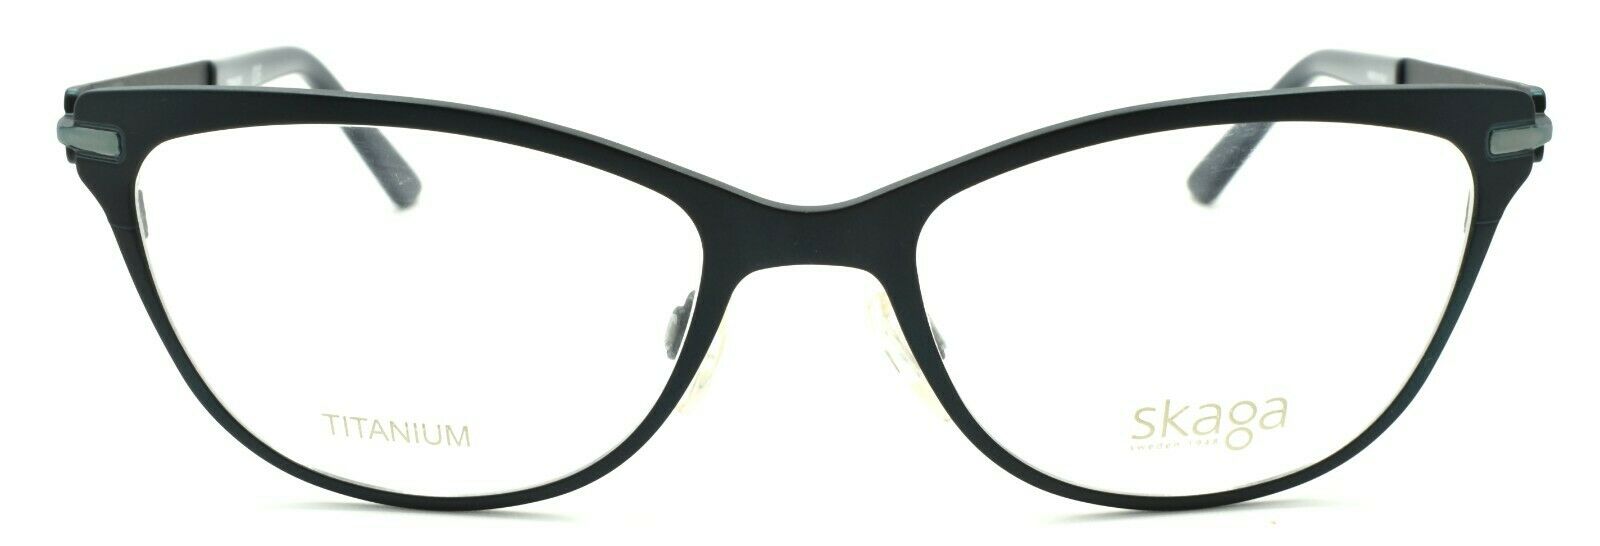 2-Skaga 3875-U Jennifer 306 Women's Eyeglasses Cat Eye TITANIUM 53-18-135 Petrol-IKSpecs